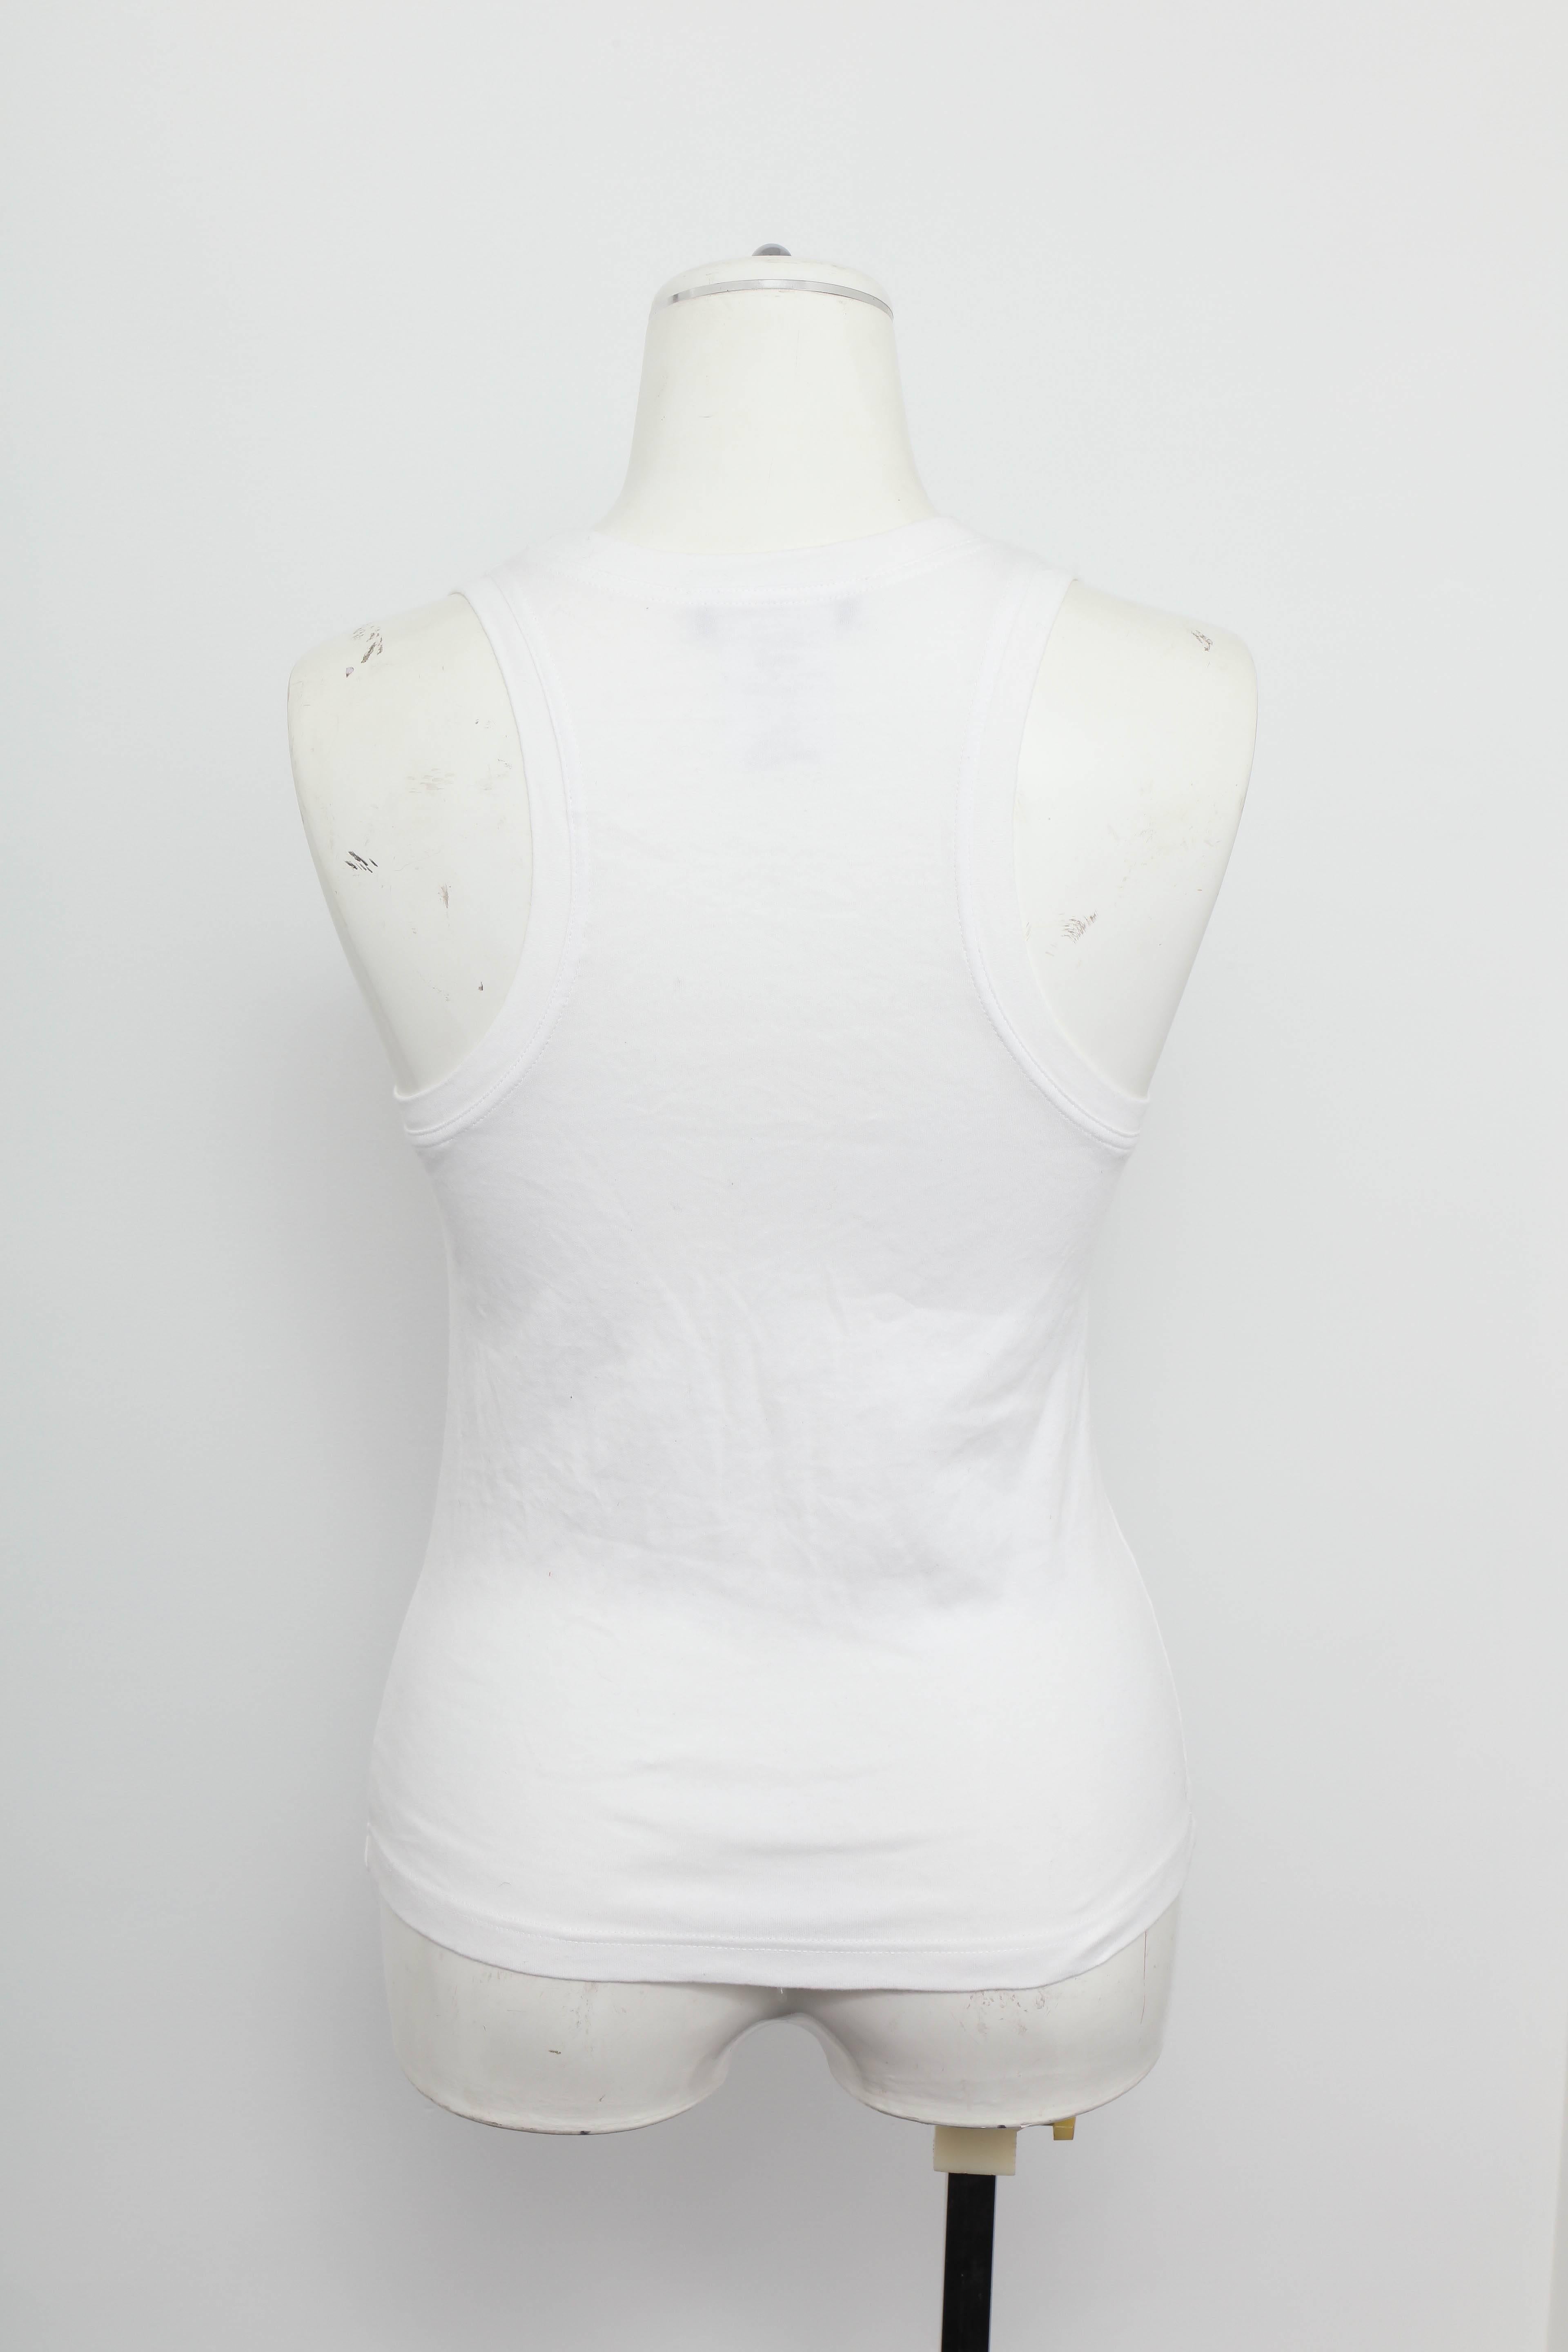 Gray Christian Dior by John Galliano Peace Tank Top T-shirt with Rhinestones